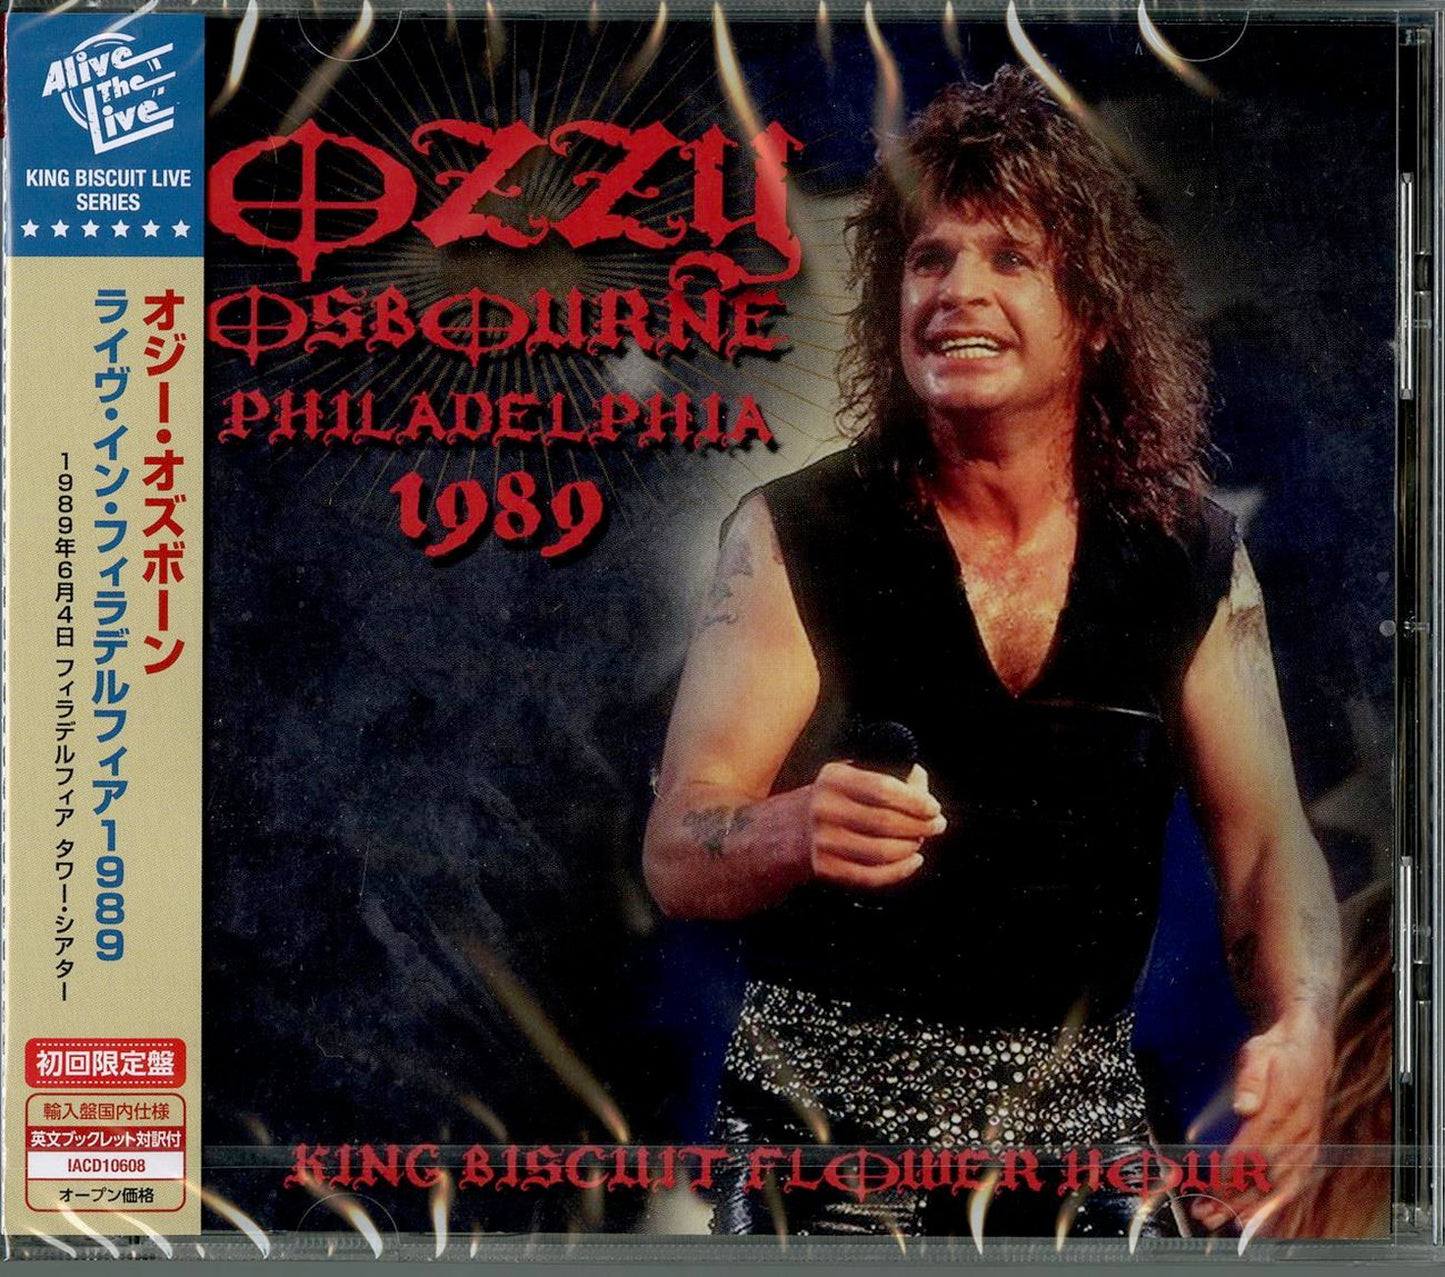 Ozzy Osbourne - Philadelphia 1989 King Biscuit Flower Hour - Import CD